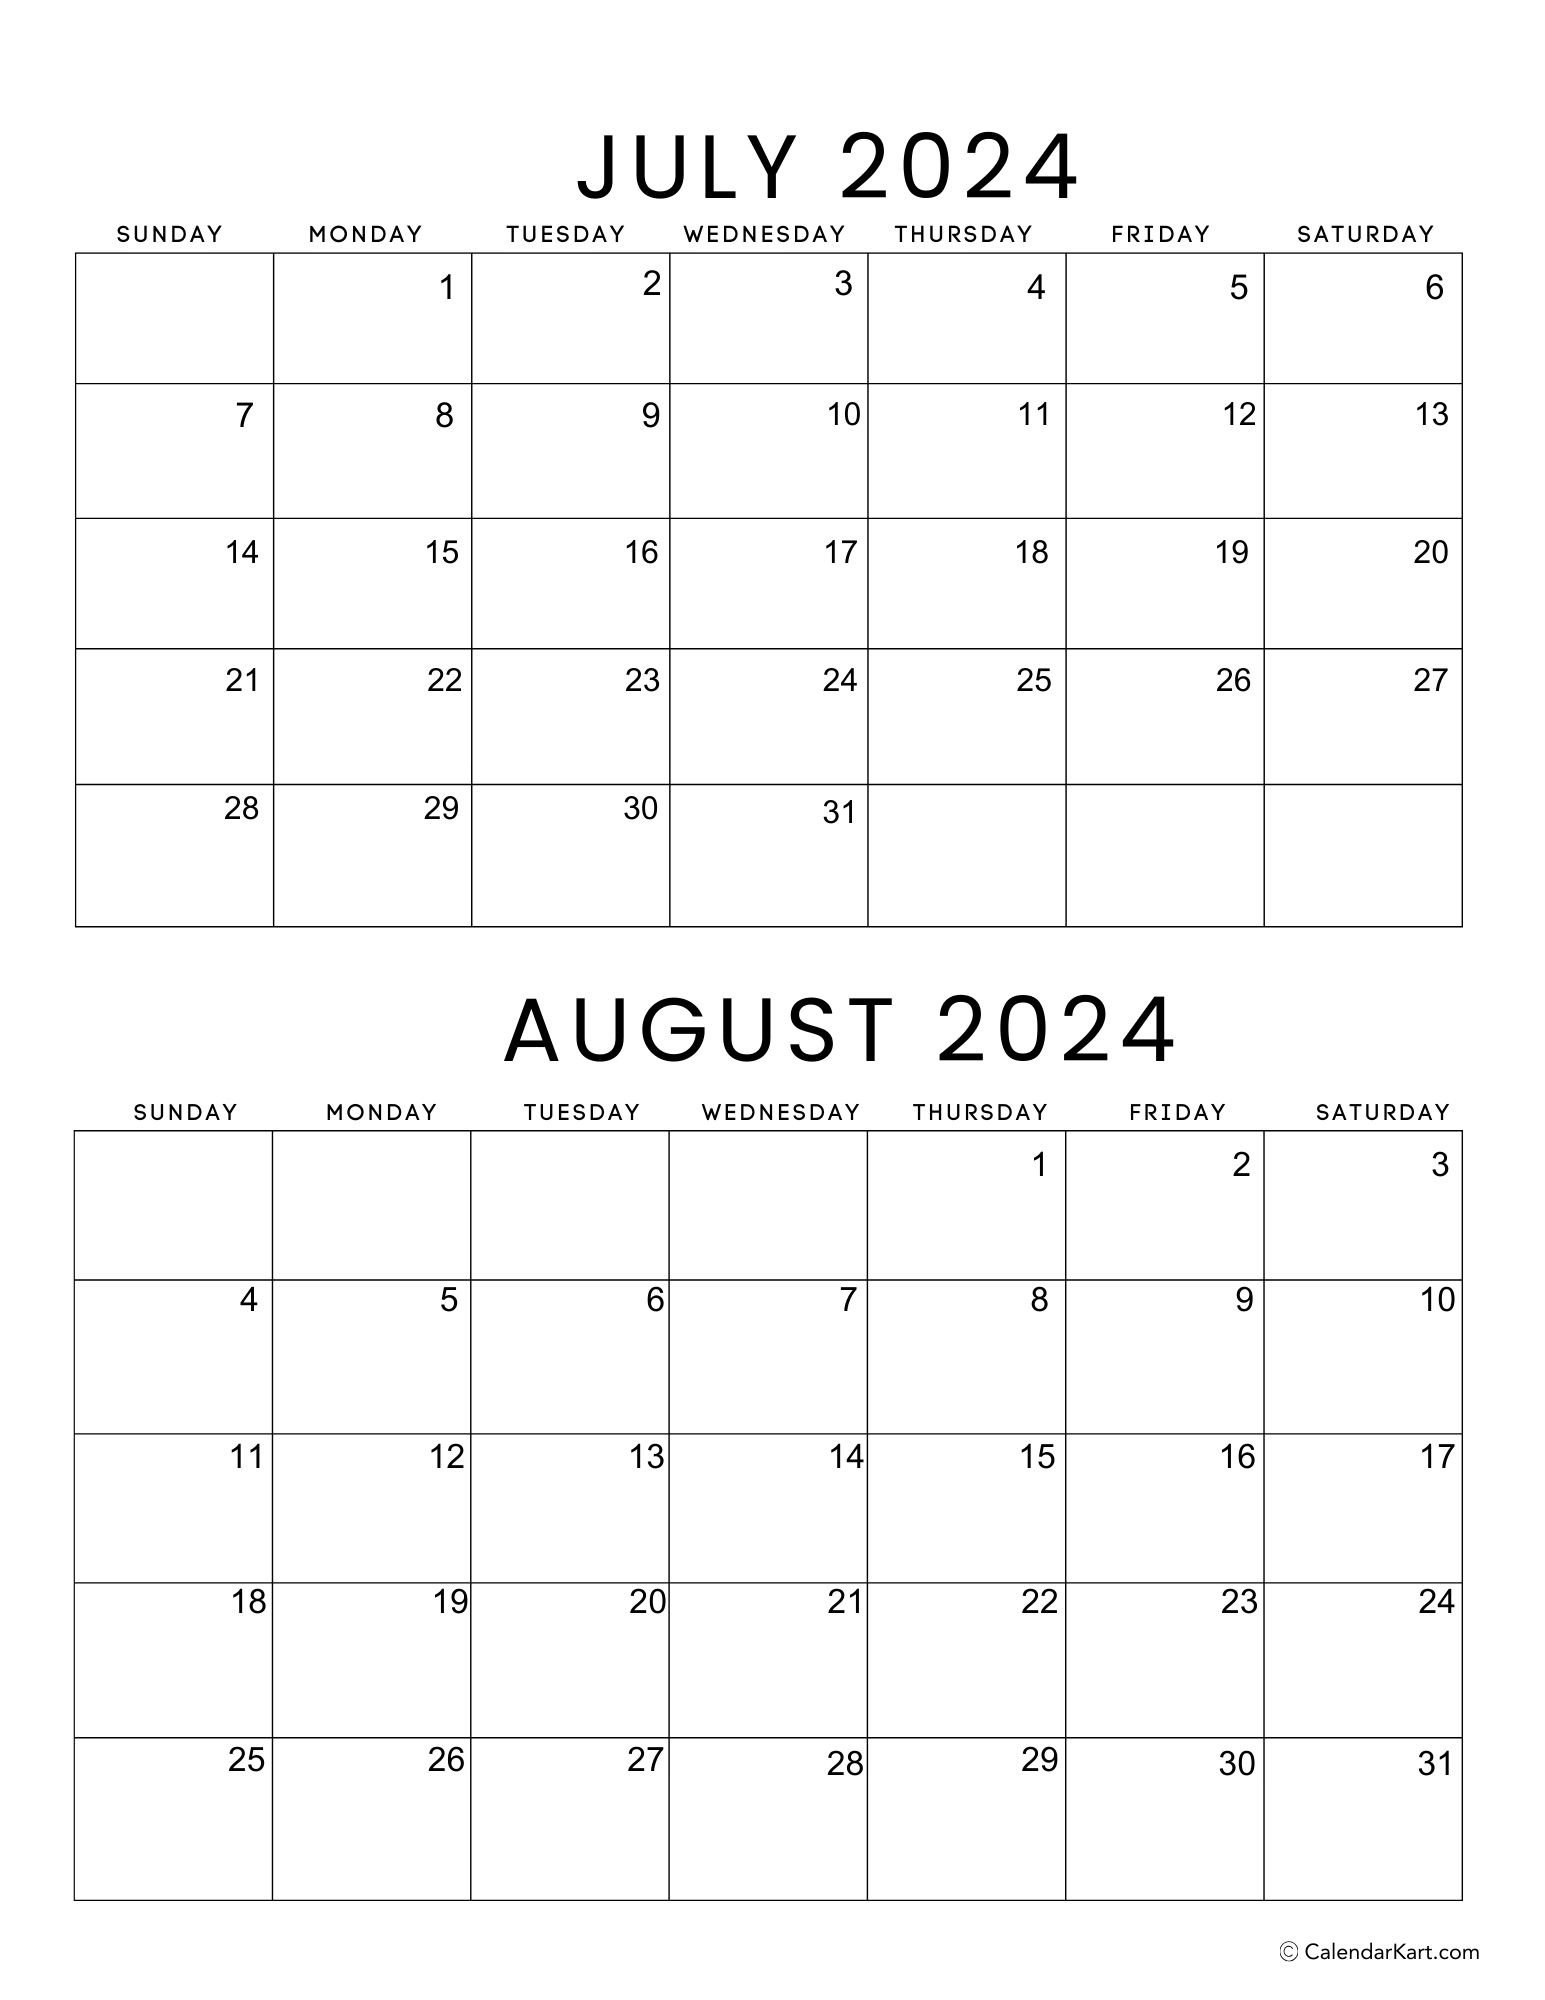 Printable July August 2024 Calendar | Calendarkart intended for Calendar Before July and August 2024